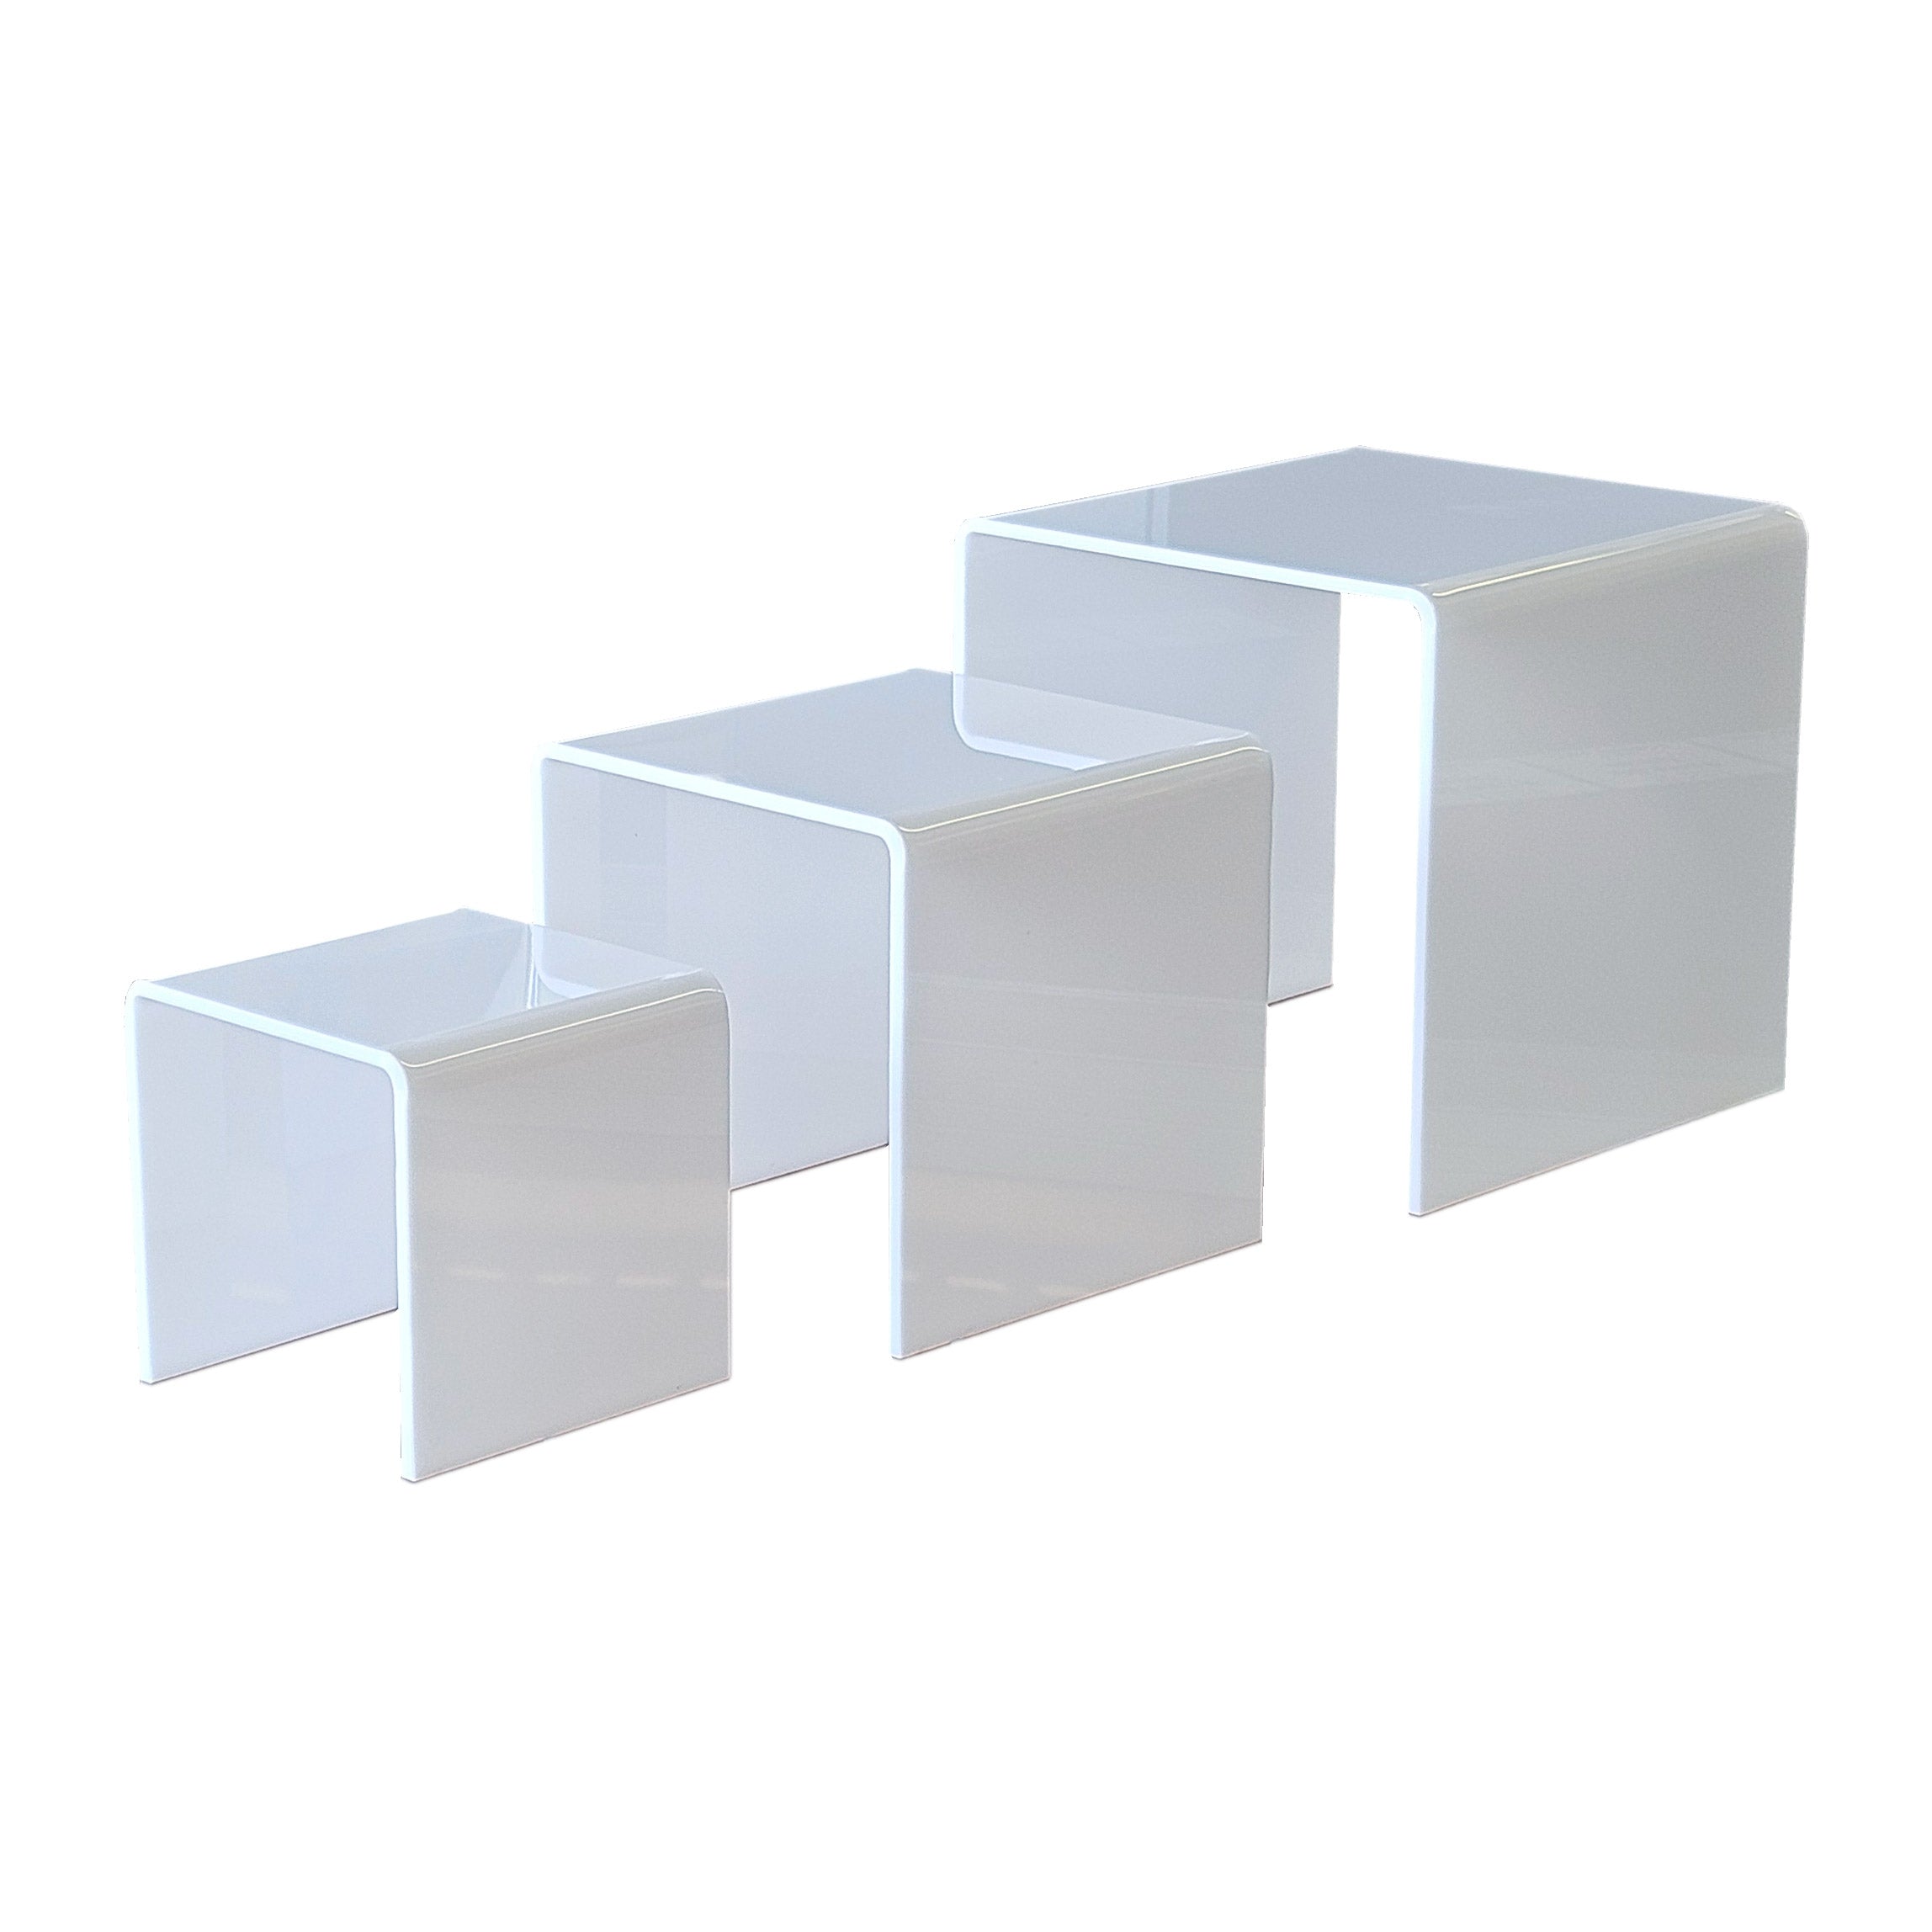 Small Square Risers | Set of 3 | White Acrylic - Eddie's Hang-Up Display Ltd.